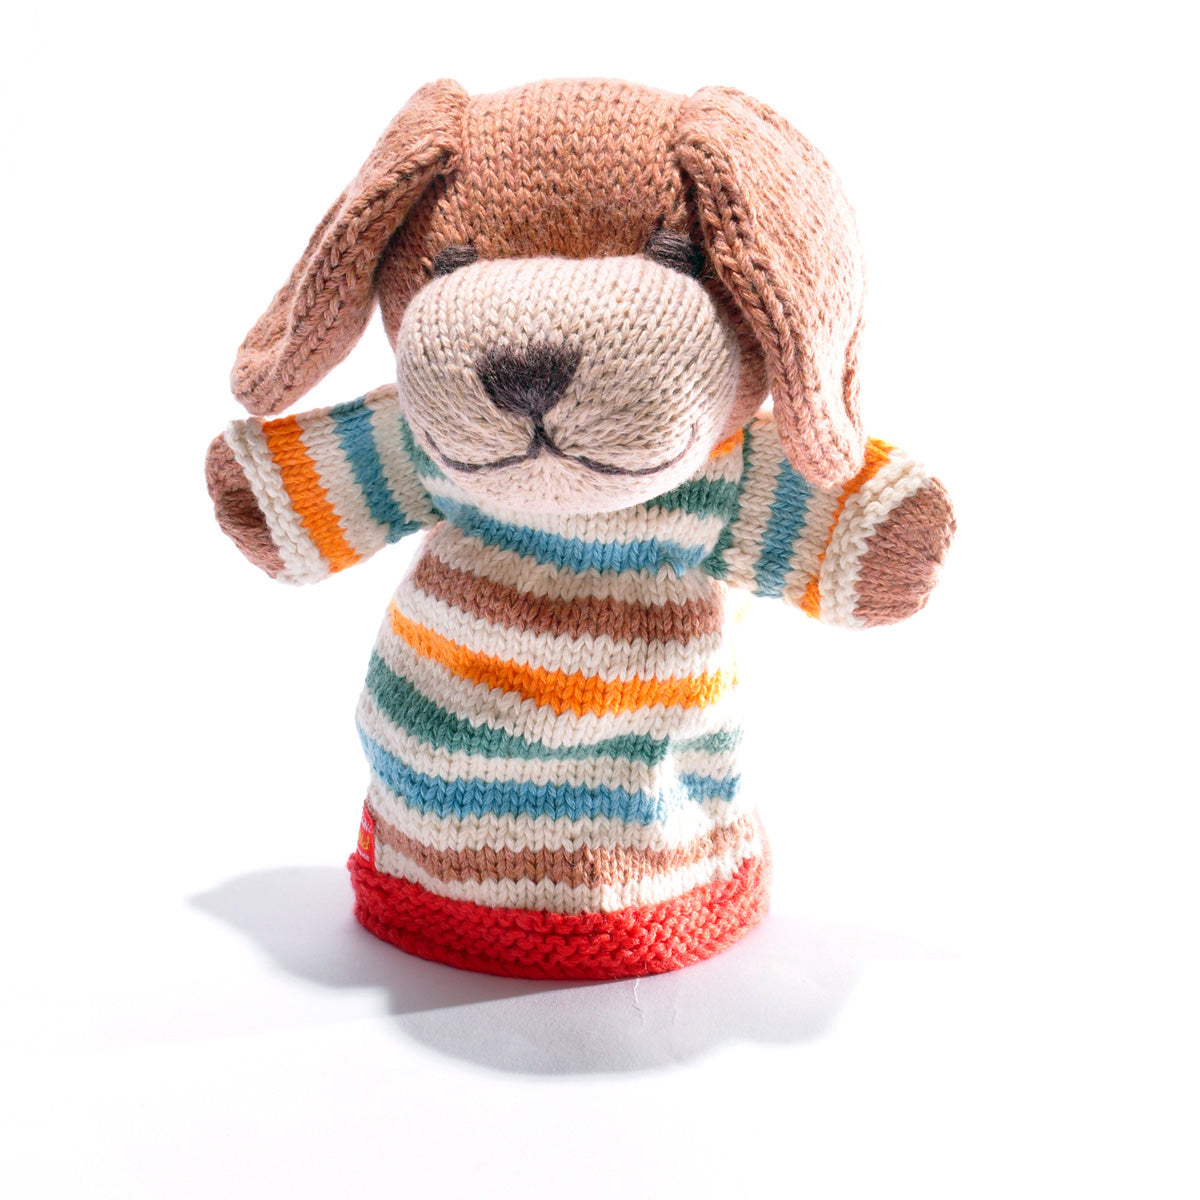 Stripe Dog Hand Puppet - The Nancy Smillie Shop - Art, Jewellery & Designer Gifts Glasgow